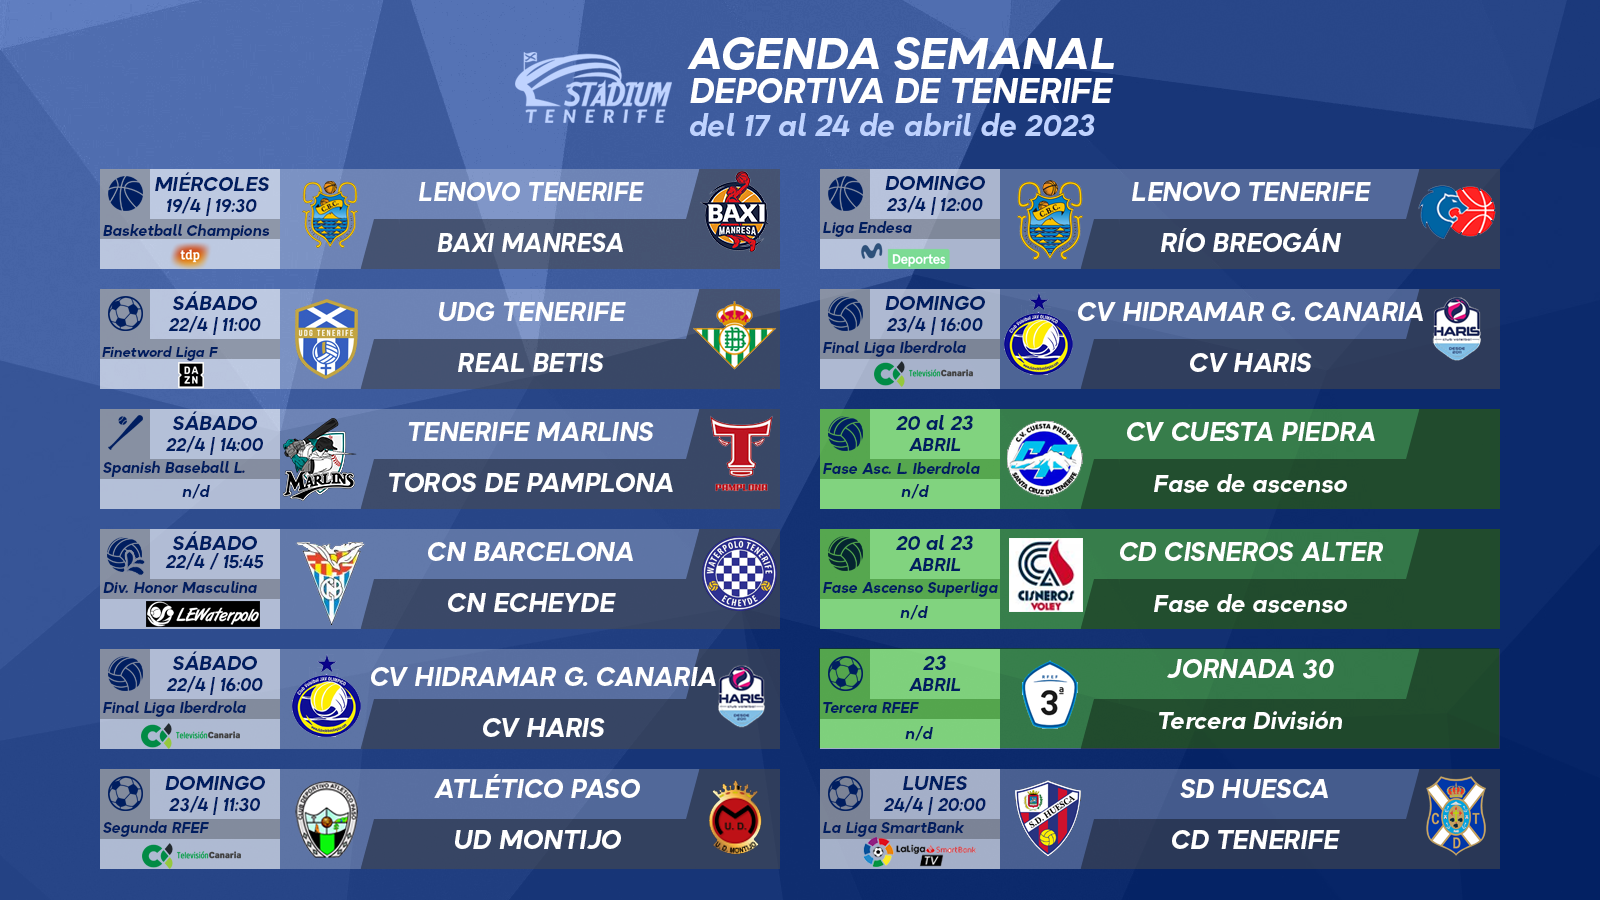 Agenda Semanal Deportiva de Tenerife (17 al 24 de abril)